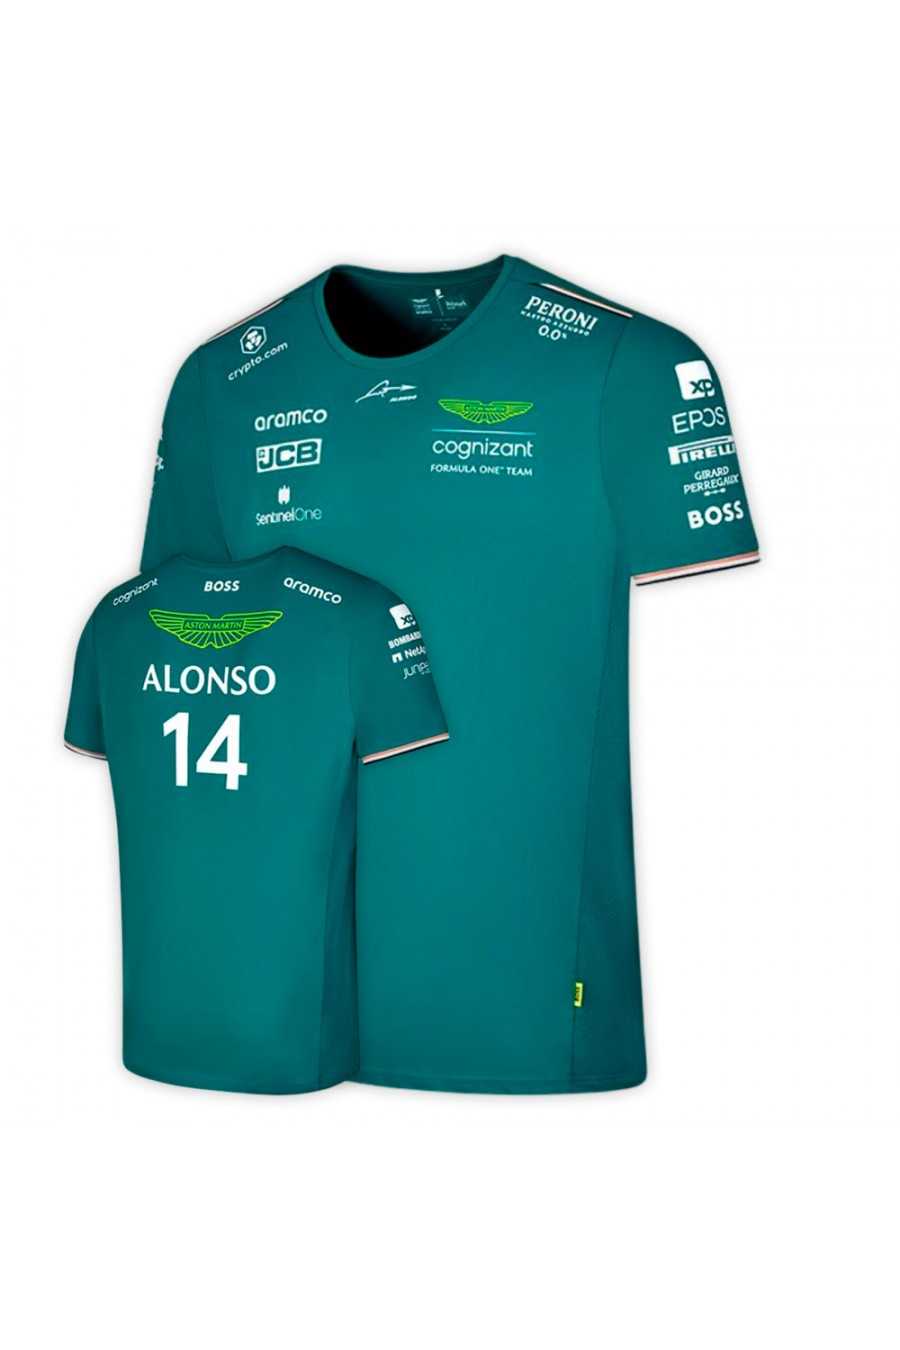 Camiseta del equipo Aston Martin F1 de Fernando Alonso por SOLO 5€